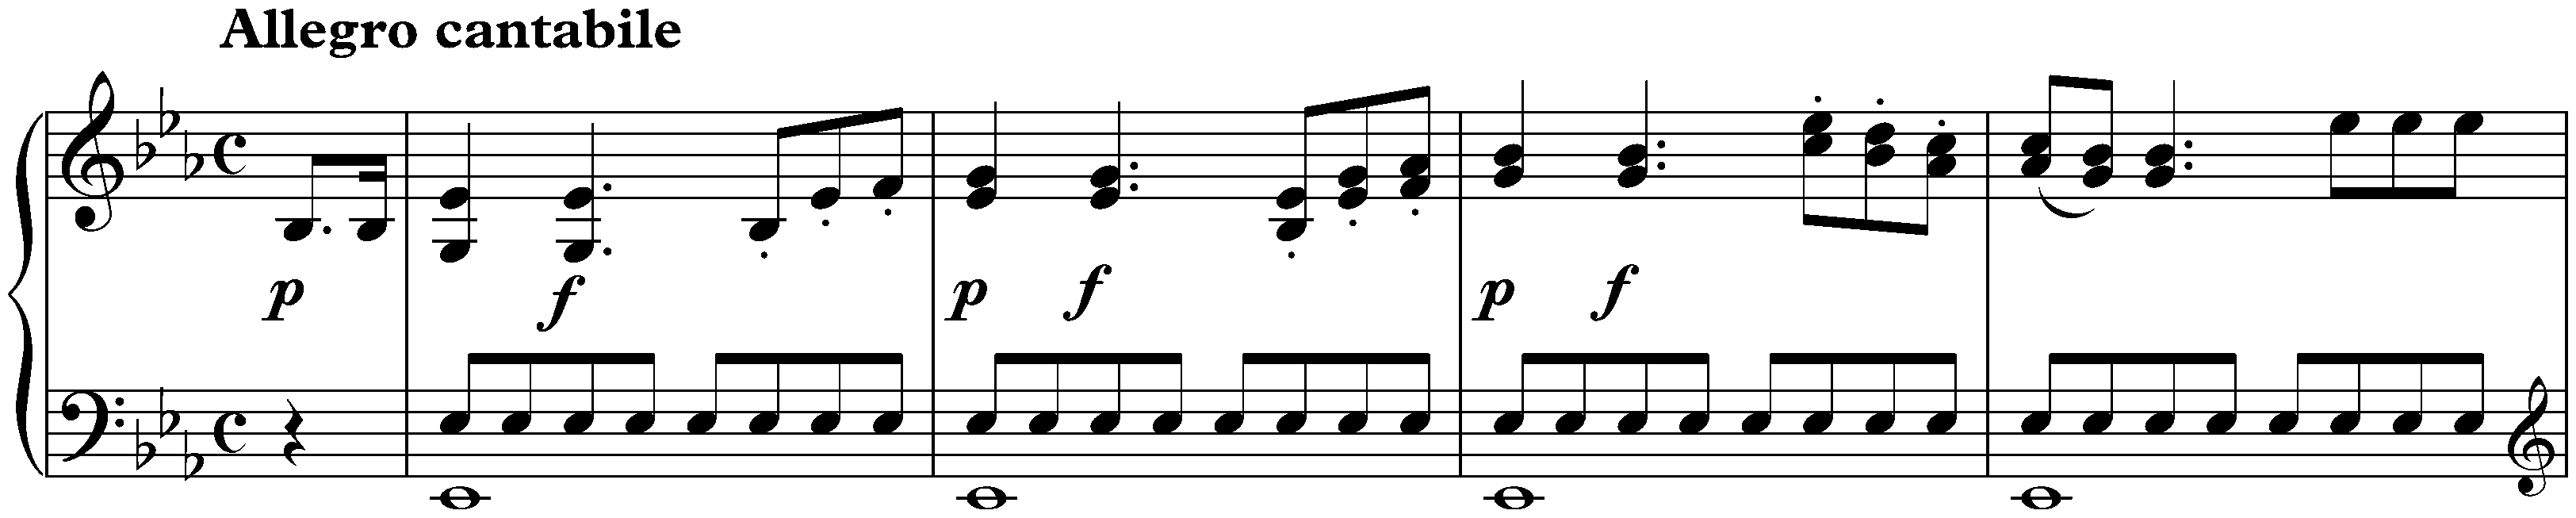 Sonata in E-flat major, WoO 47 no. 1; 1. Allegro cantabile